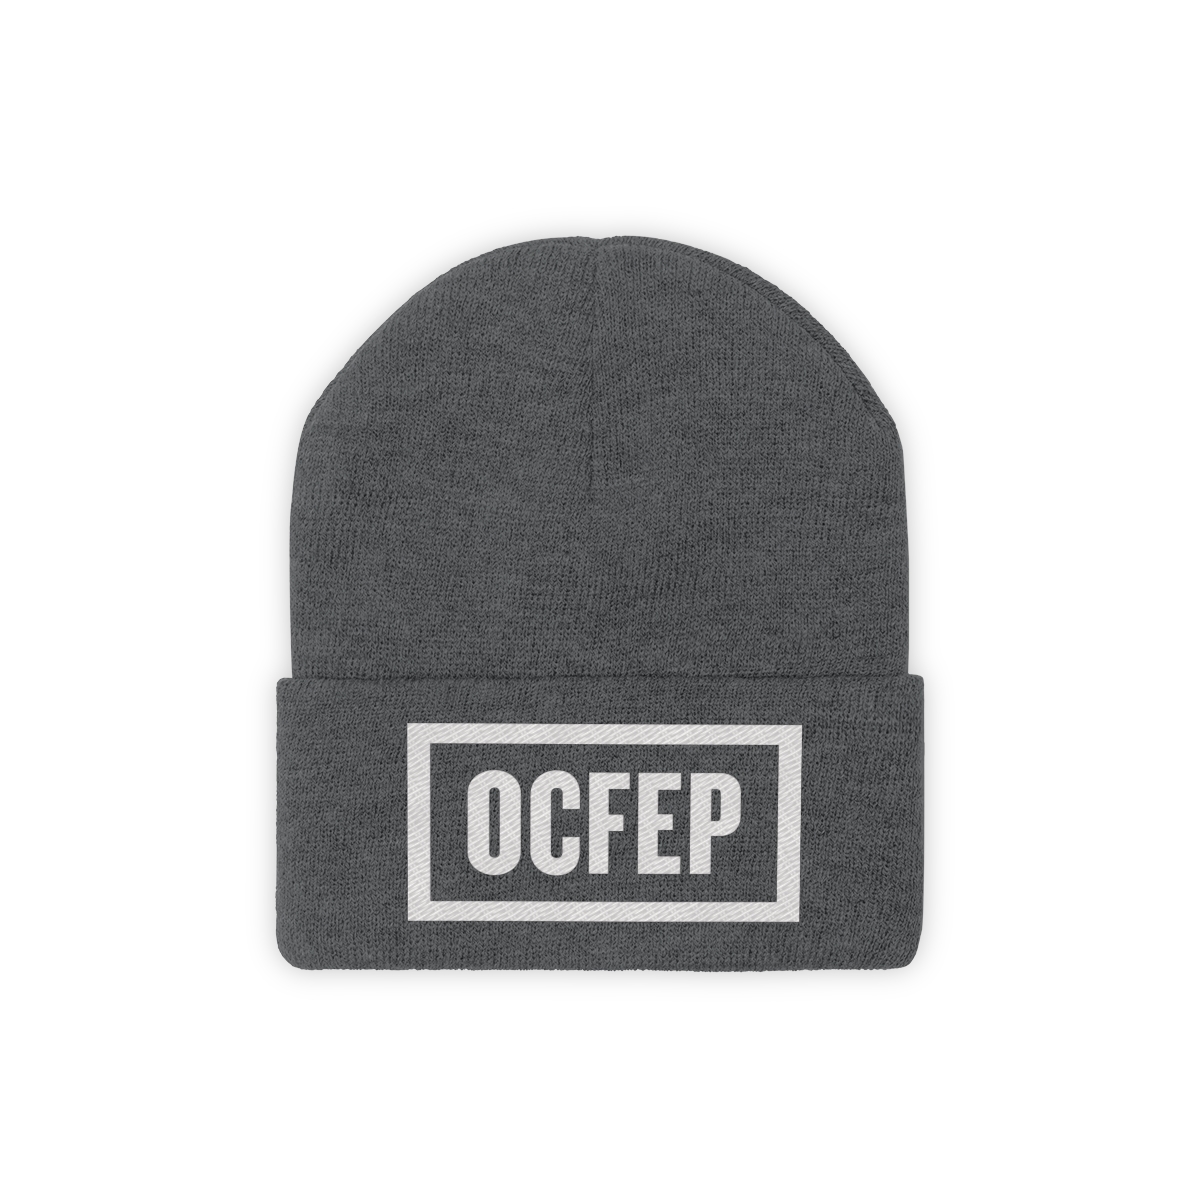 OCFEP Knit Beanie product thumbnail image